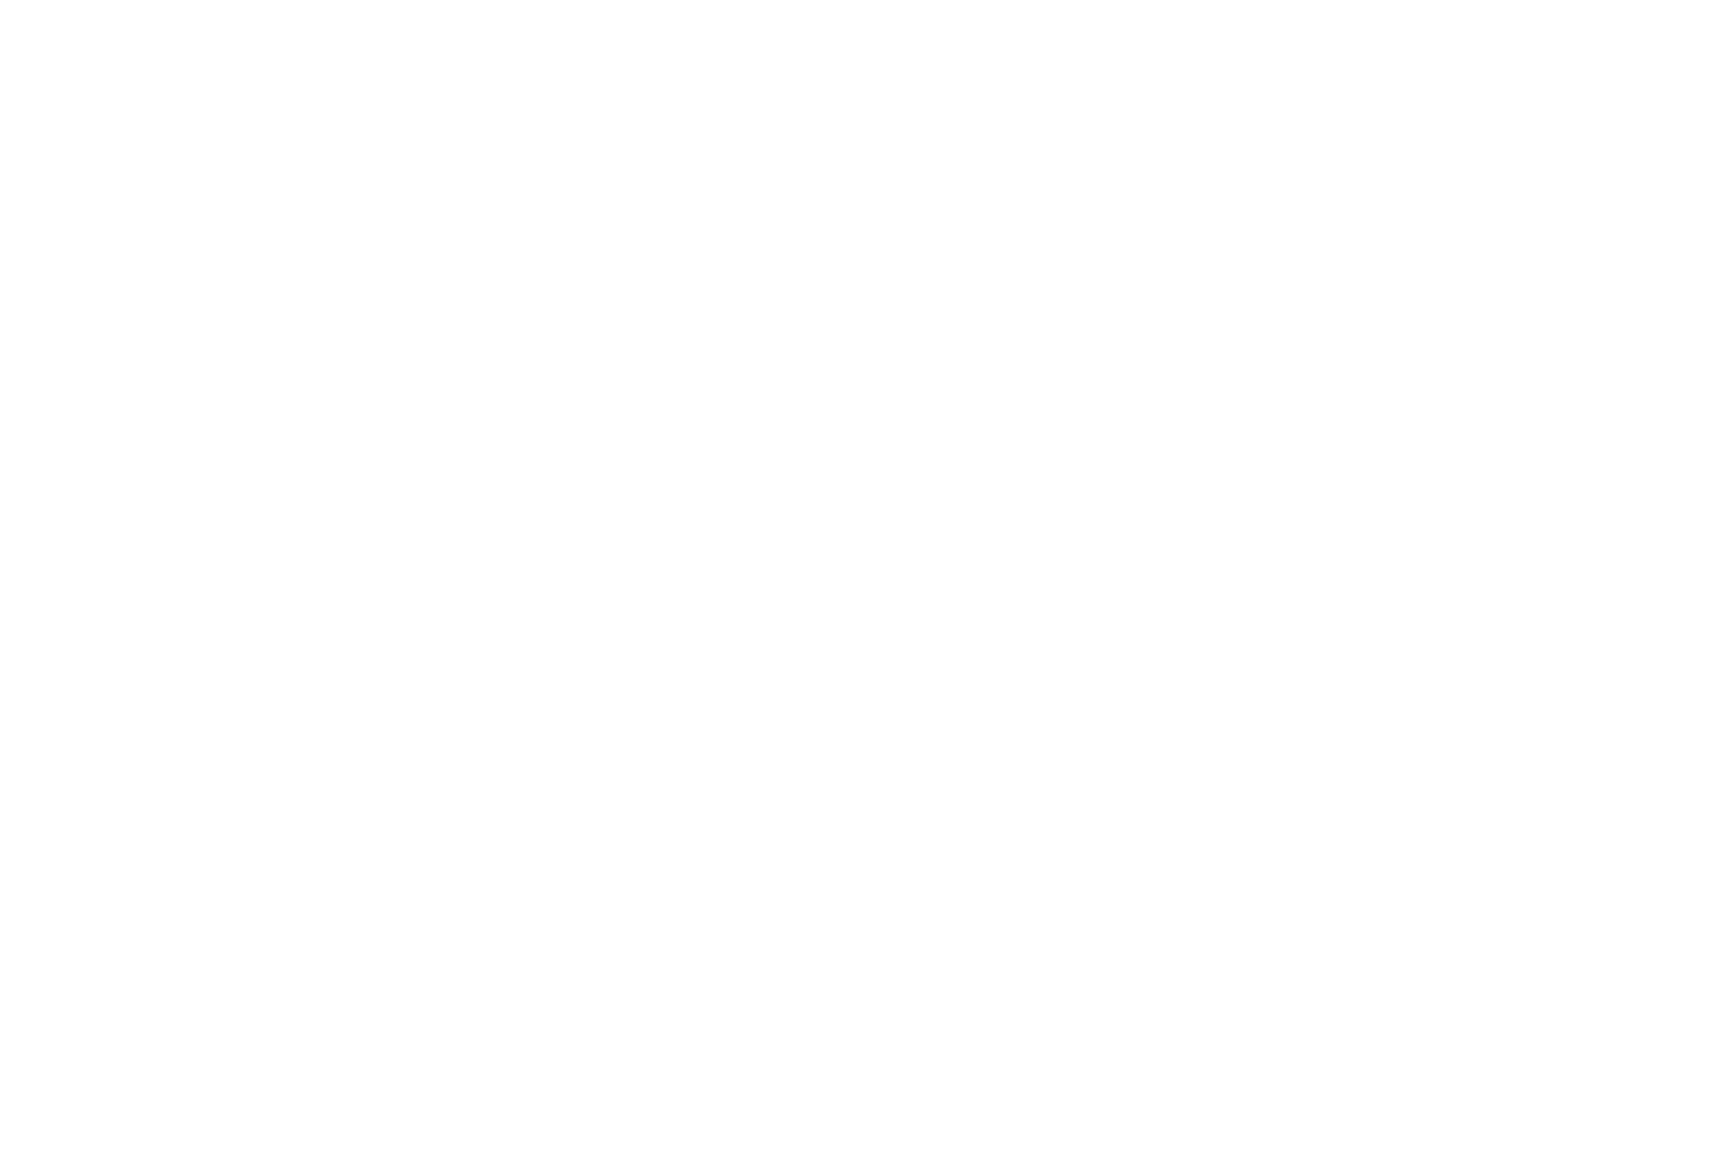 BEST DIRECTOR - GOLD - Virgin Spring Cinefest - 2020